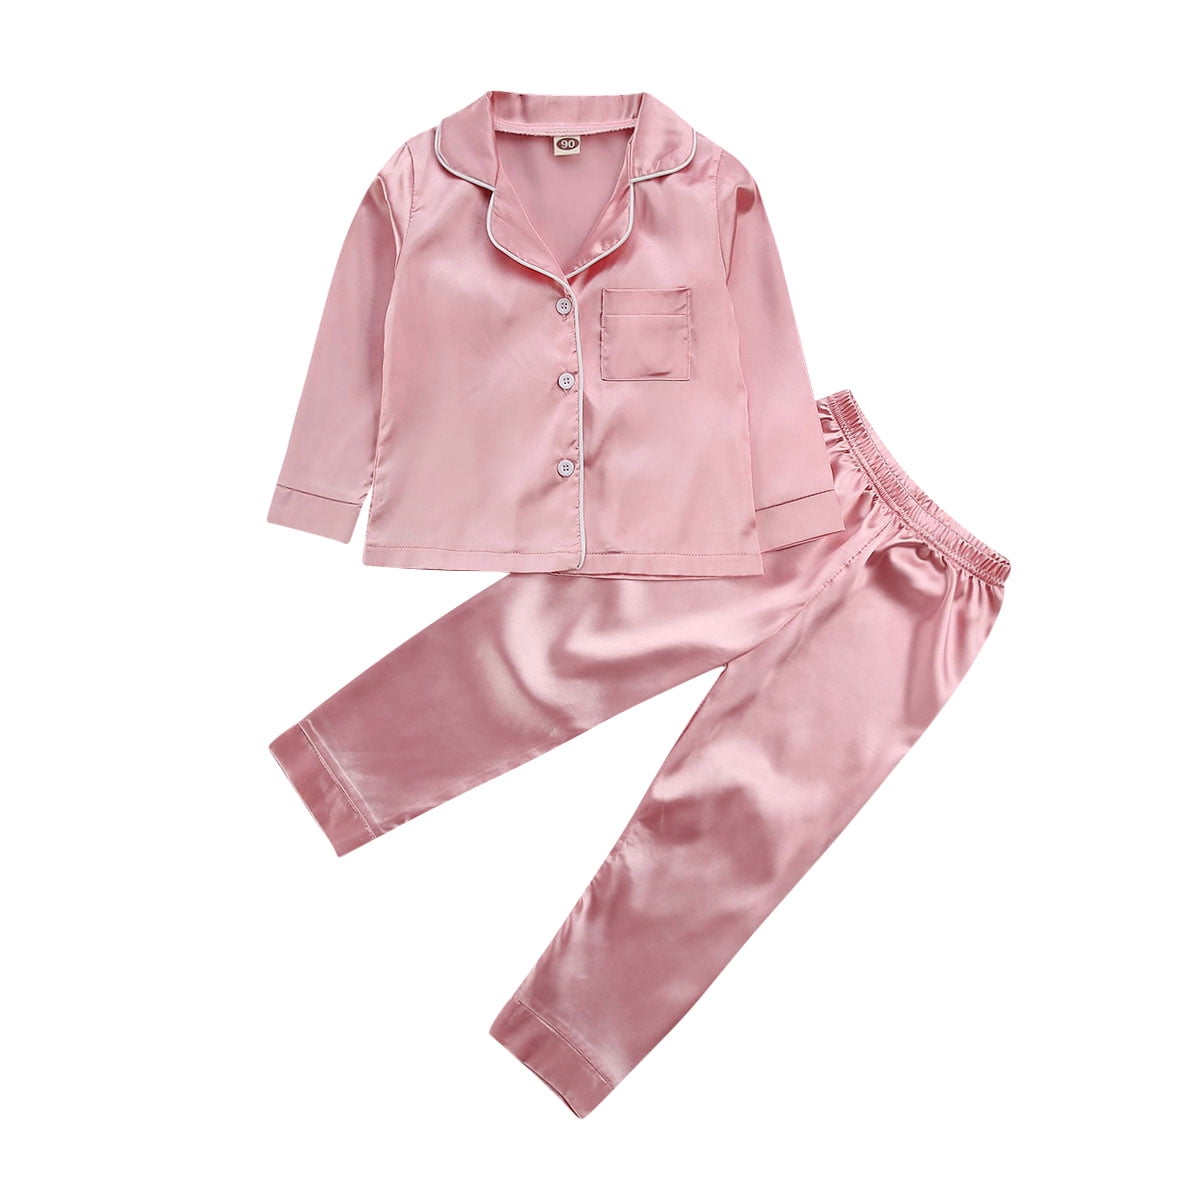 Toddler Baby Girls Boys Satin Silk Pajama Set Long Sleeve Floral Rabbit Two Piece Long Sleepwear